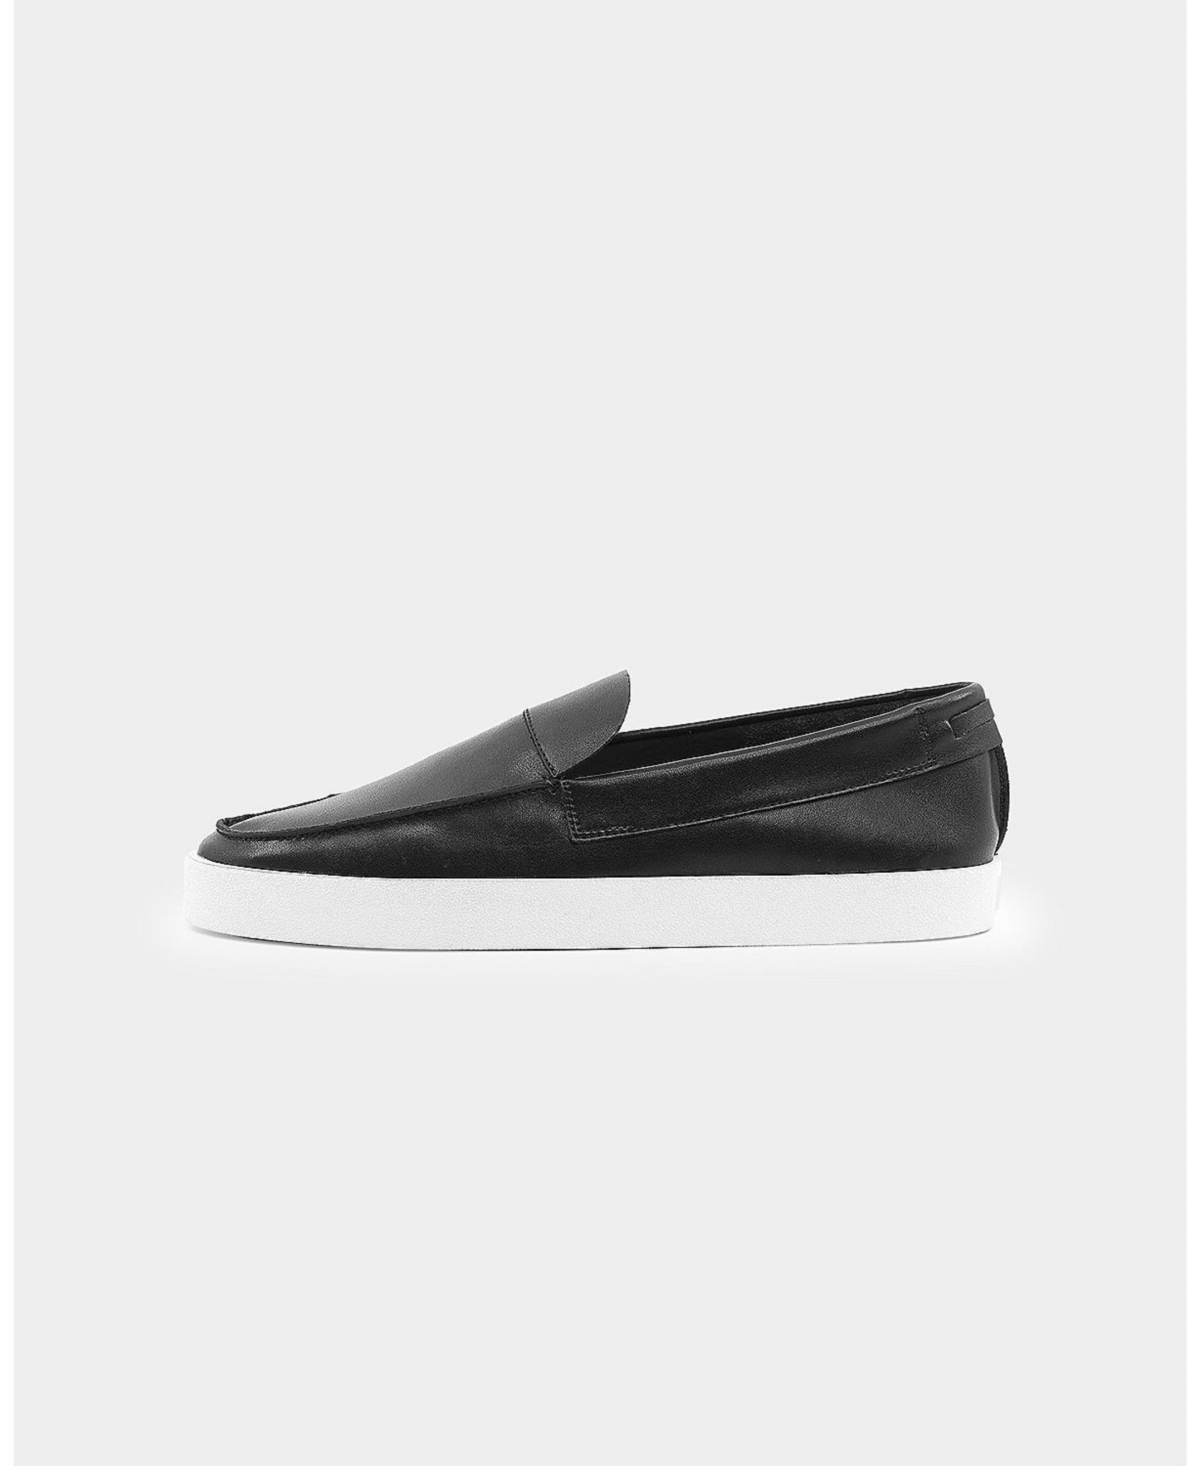 Hemisphere Leather Slip On Loafer - Black/white